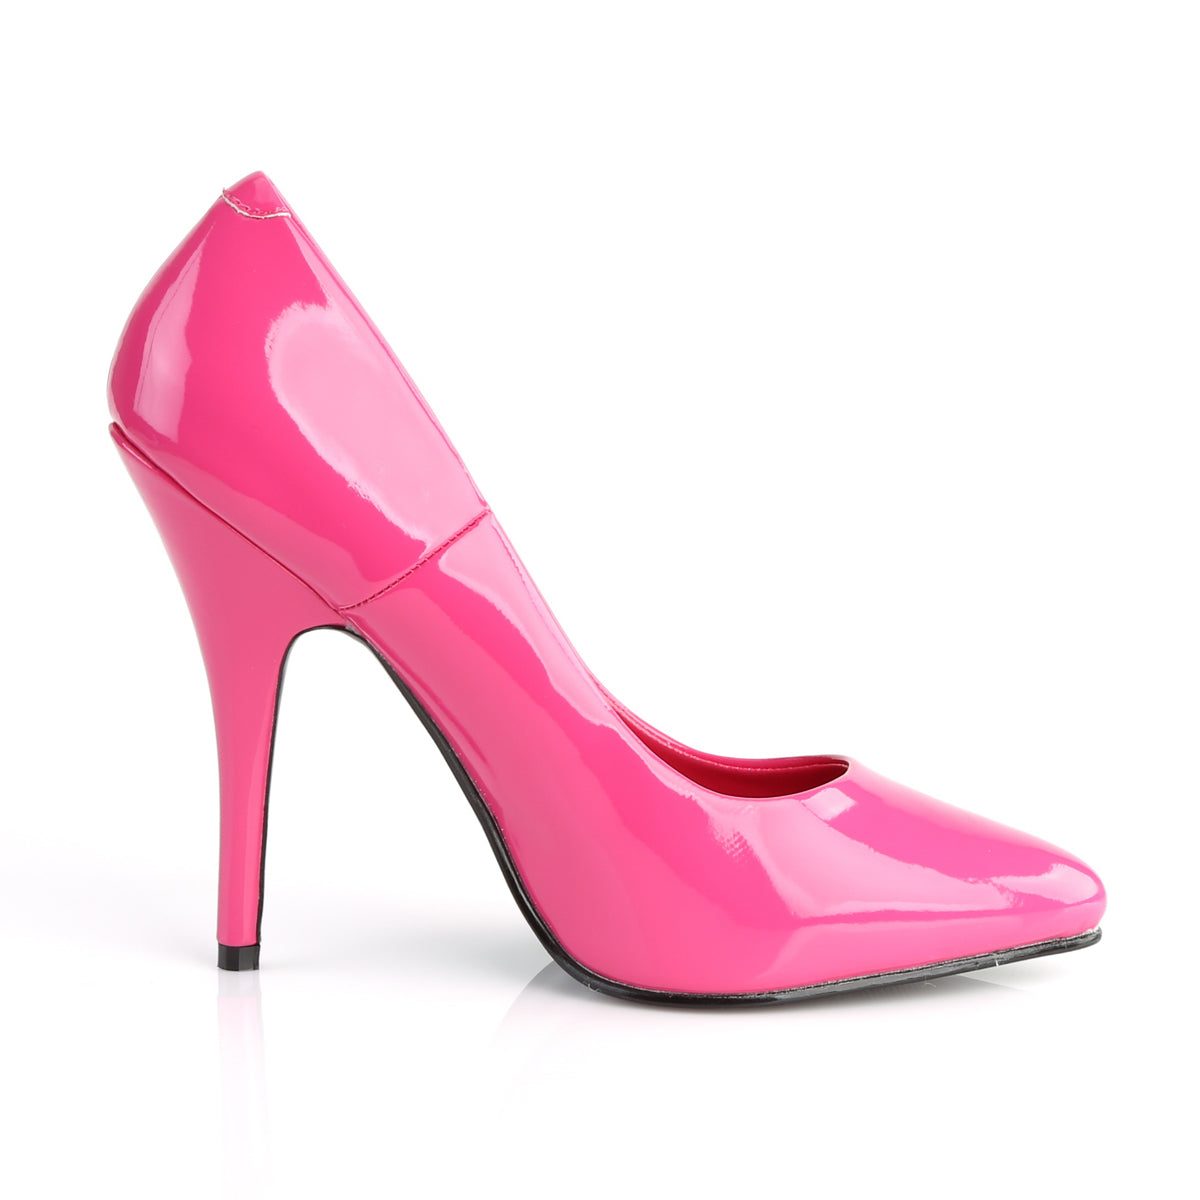 SEDUCE-420 Sexy Shoe 5" Heel Hot Pink Patent Fetish Footwear-Pleaser- Sexy Shoes Fetish Heels